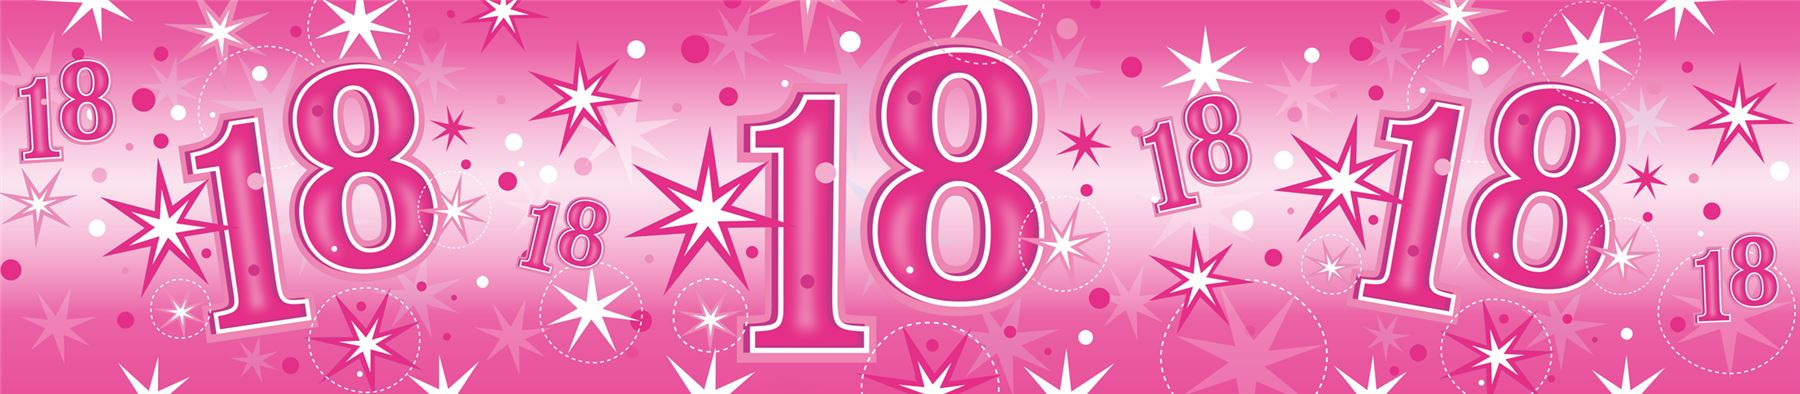 Happy 18th Birthday Decorations
 Pink Age 18 Happy 18th Birthday Party Decorations Girls